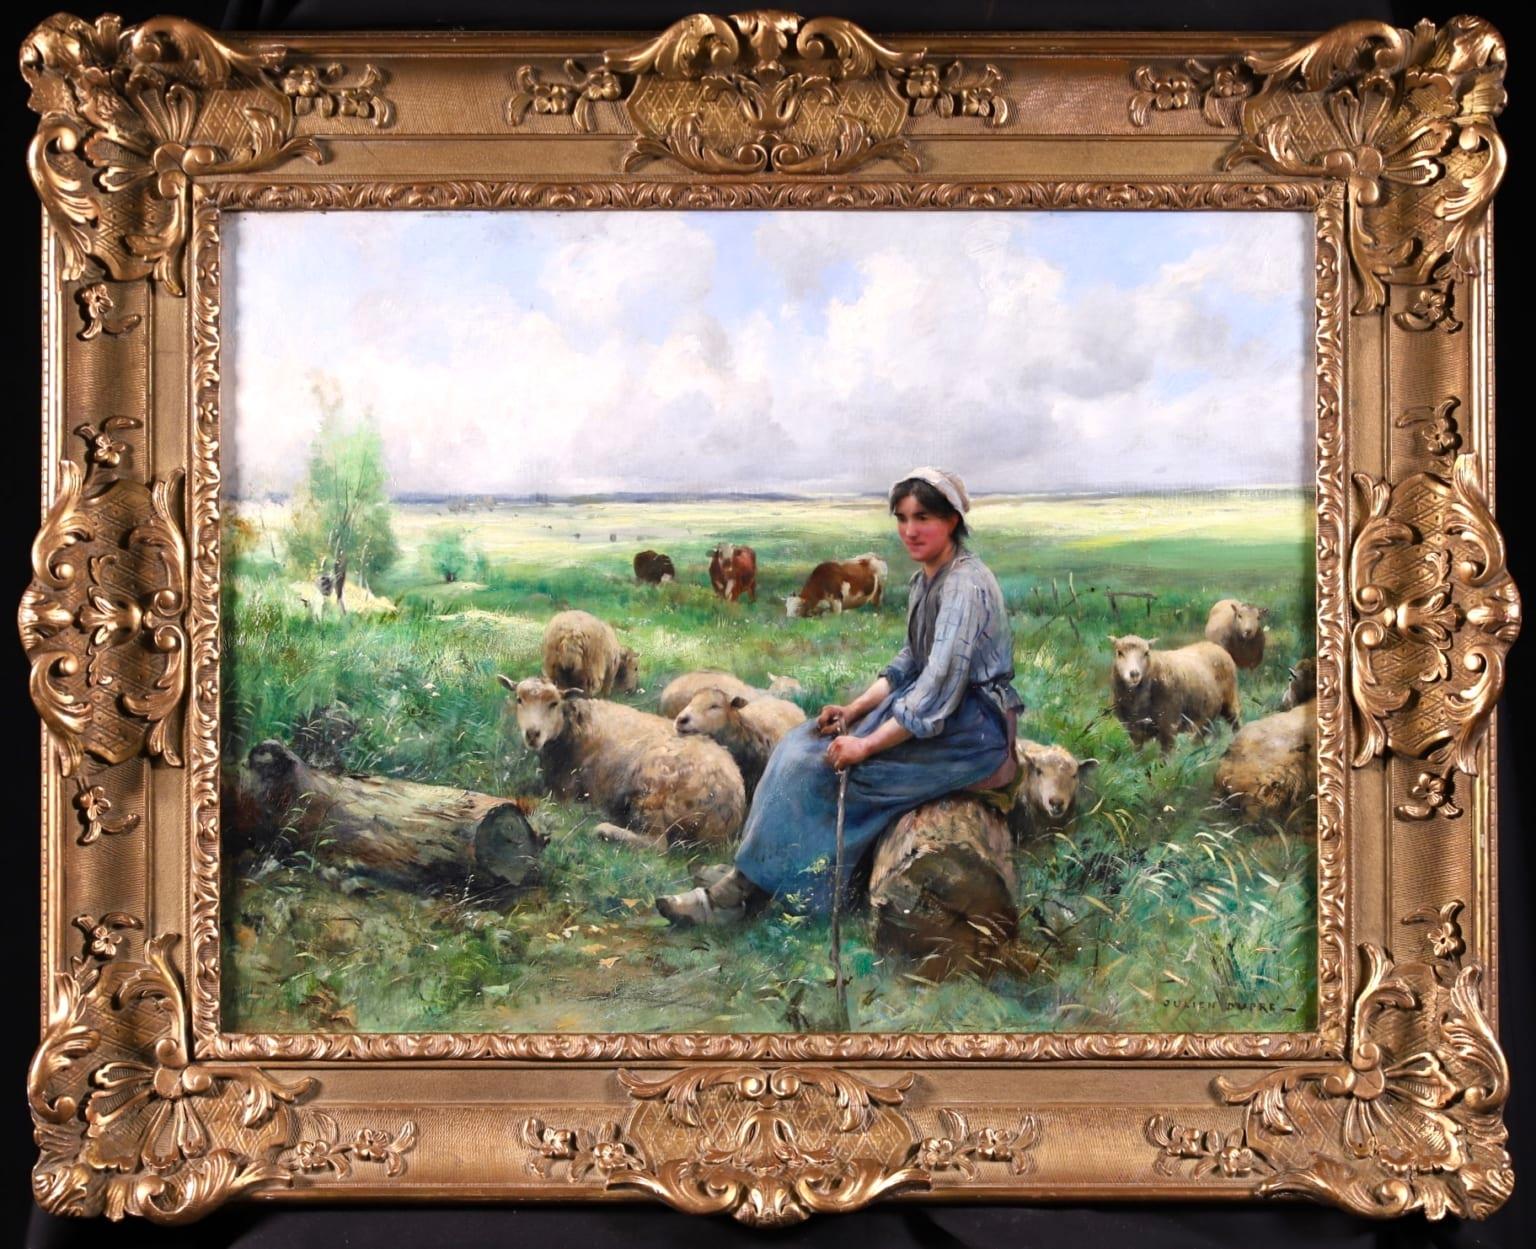 Shepherdess - French Realist Oil, Figure with Sheep in Landscape by Julien Dupre